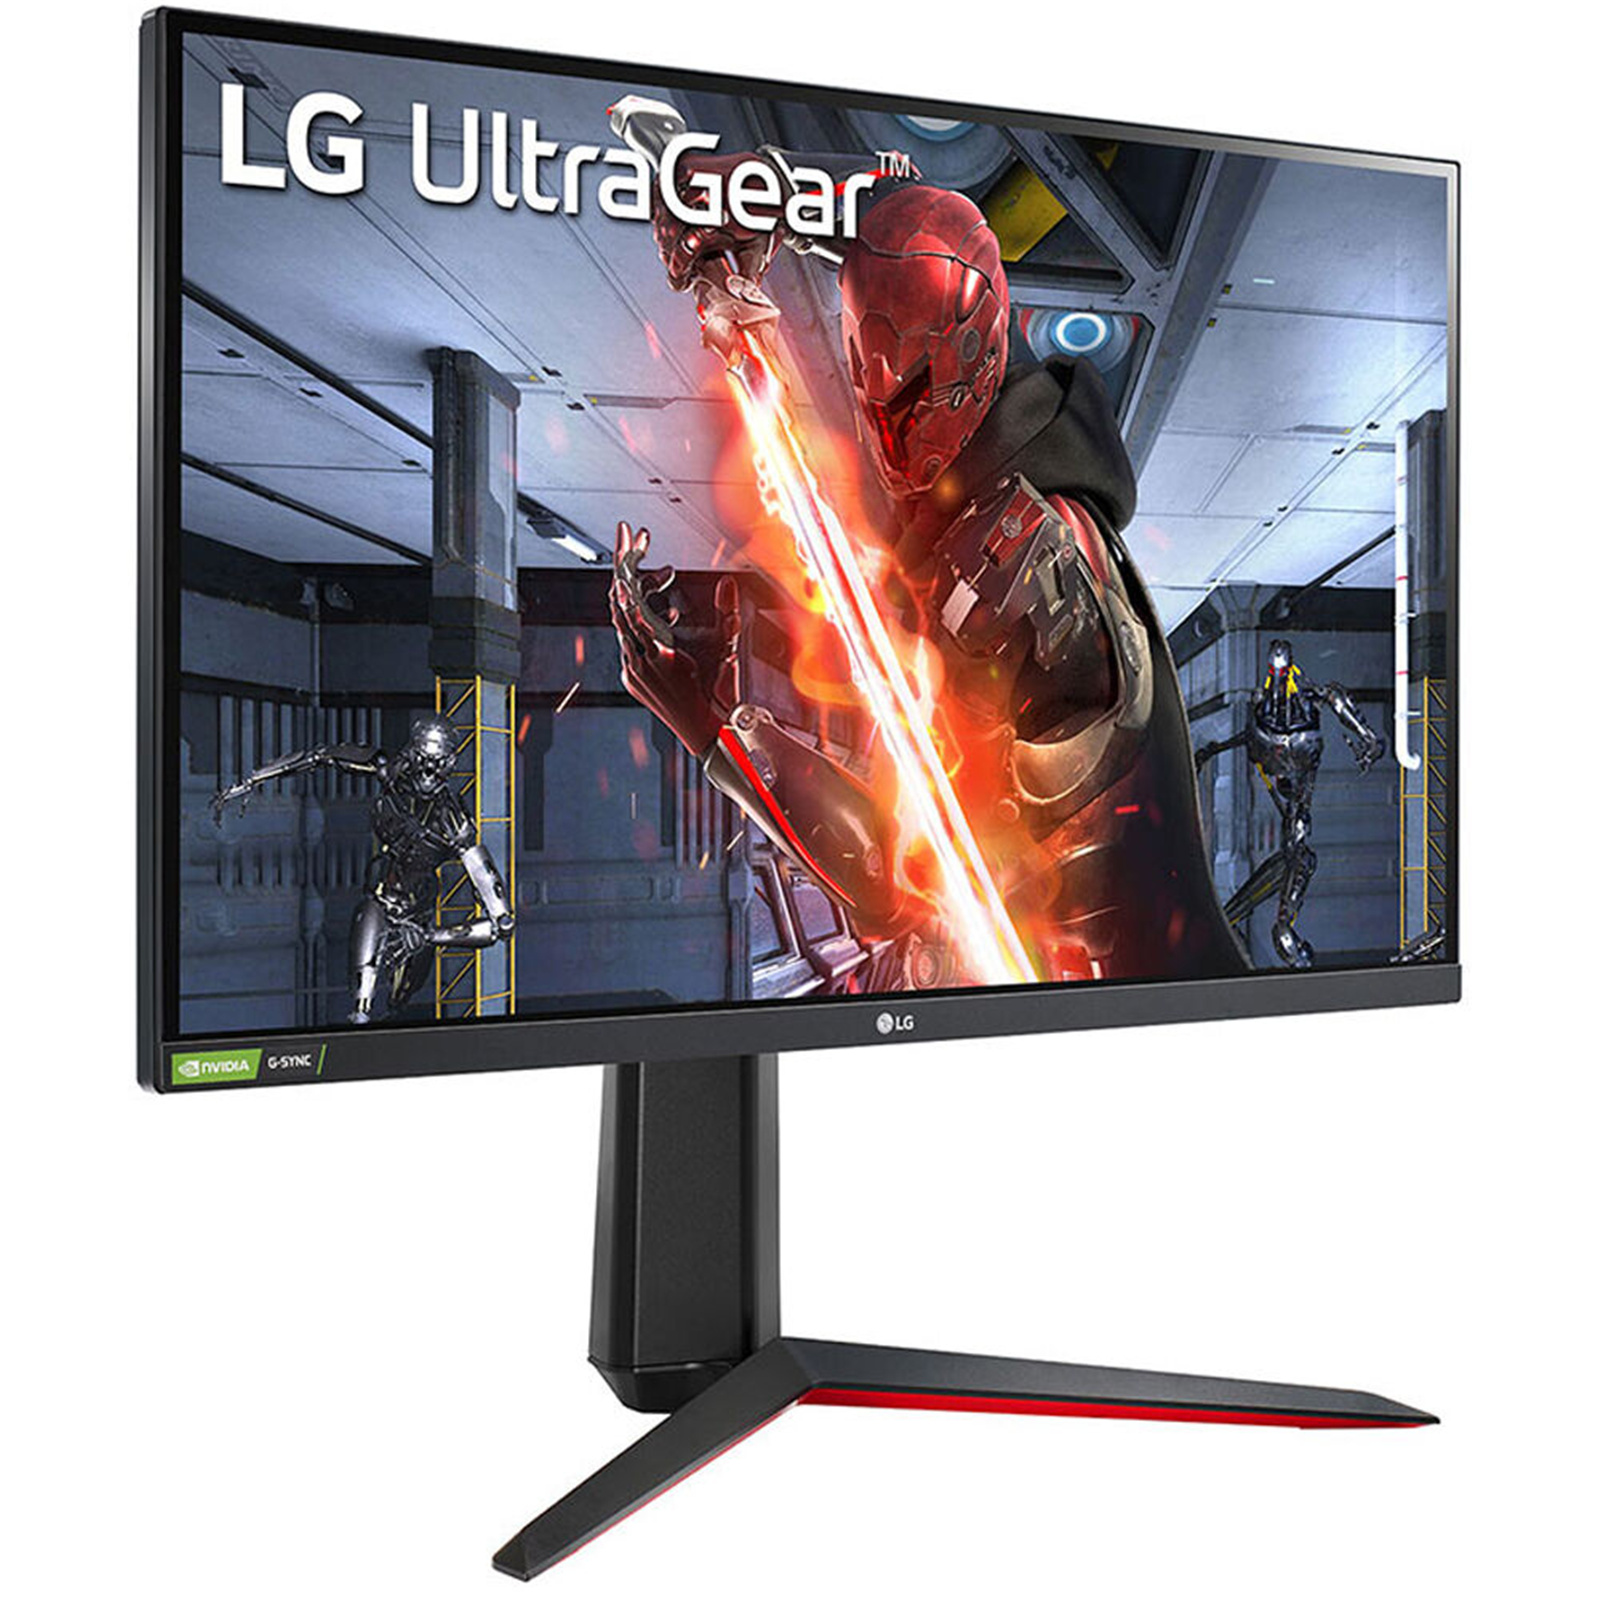 LG UltraGear 27GN650-B 27" FHD 144Hz Gaming Monitor